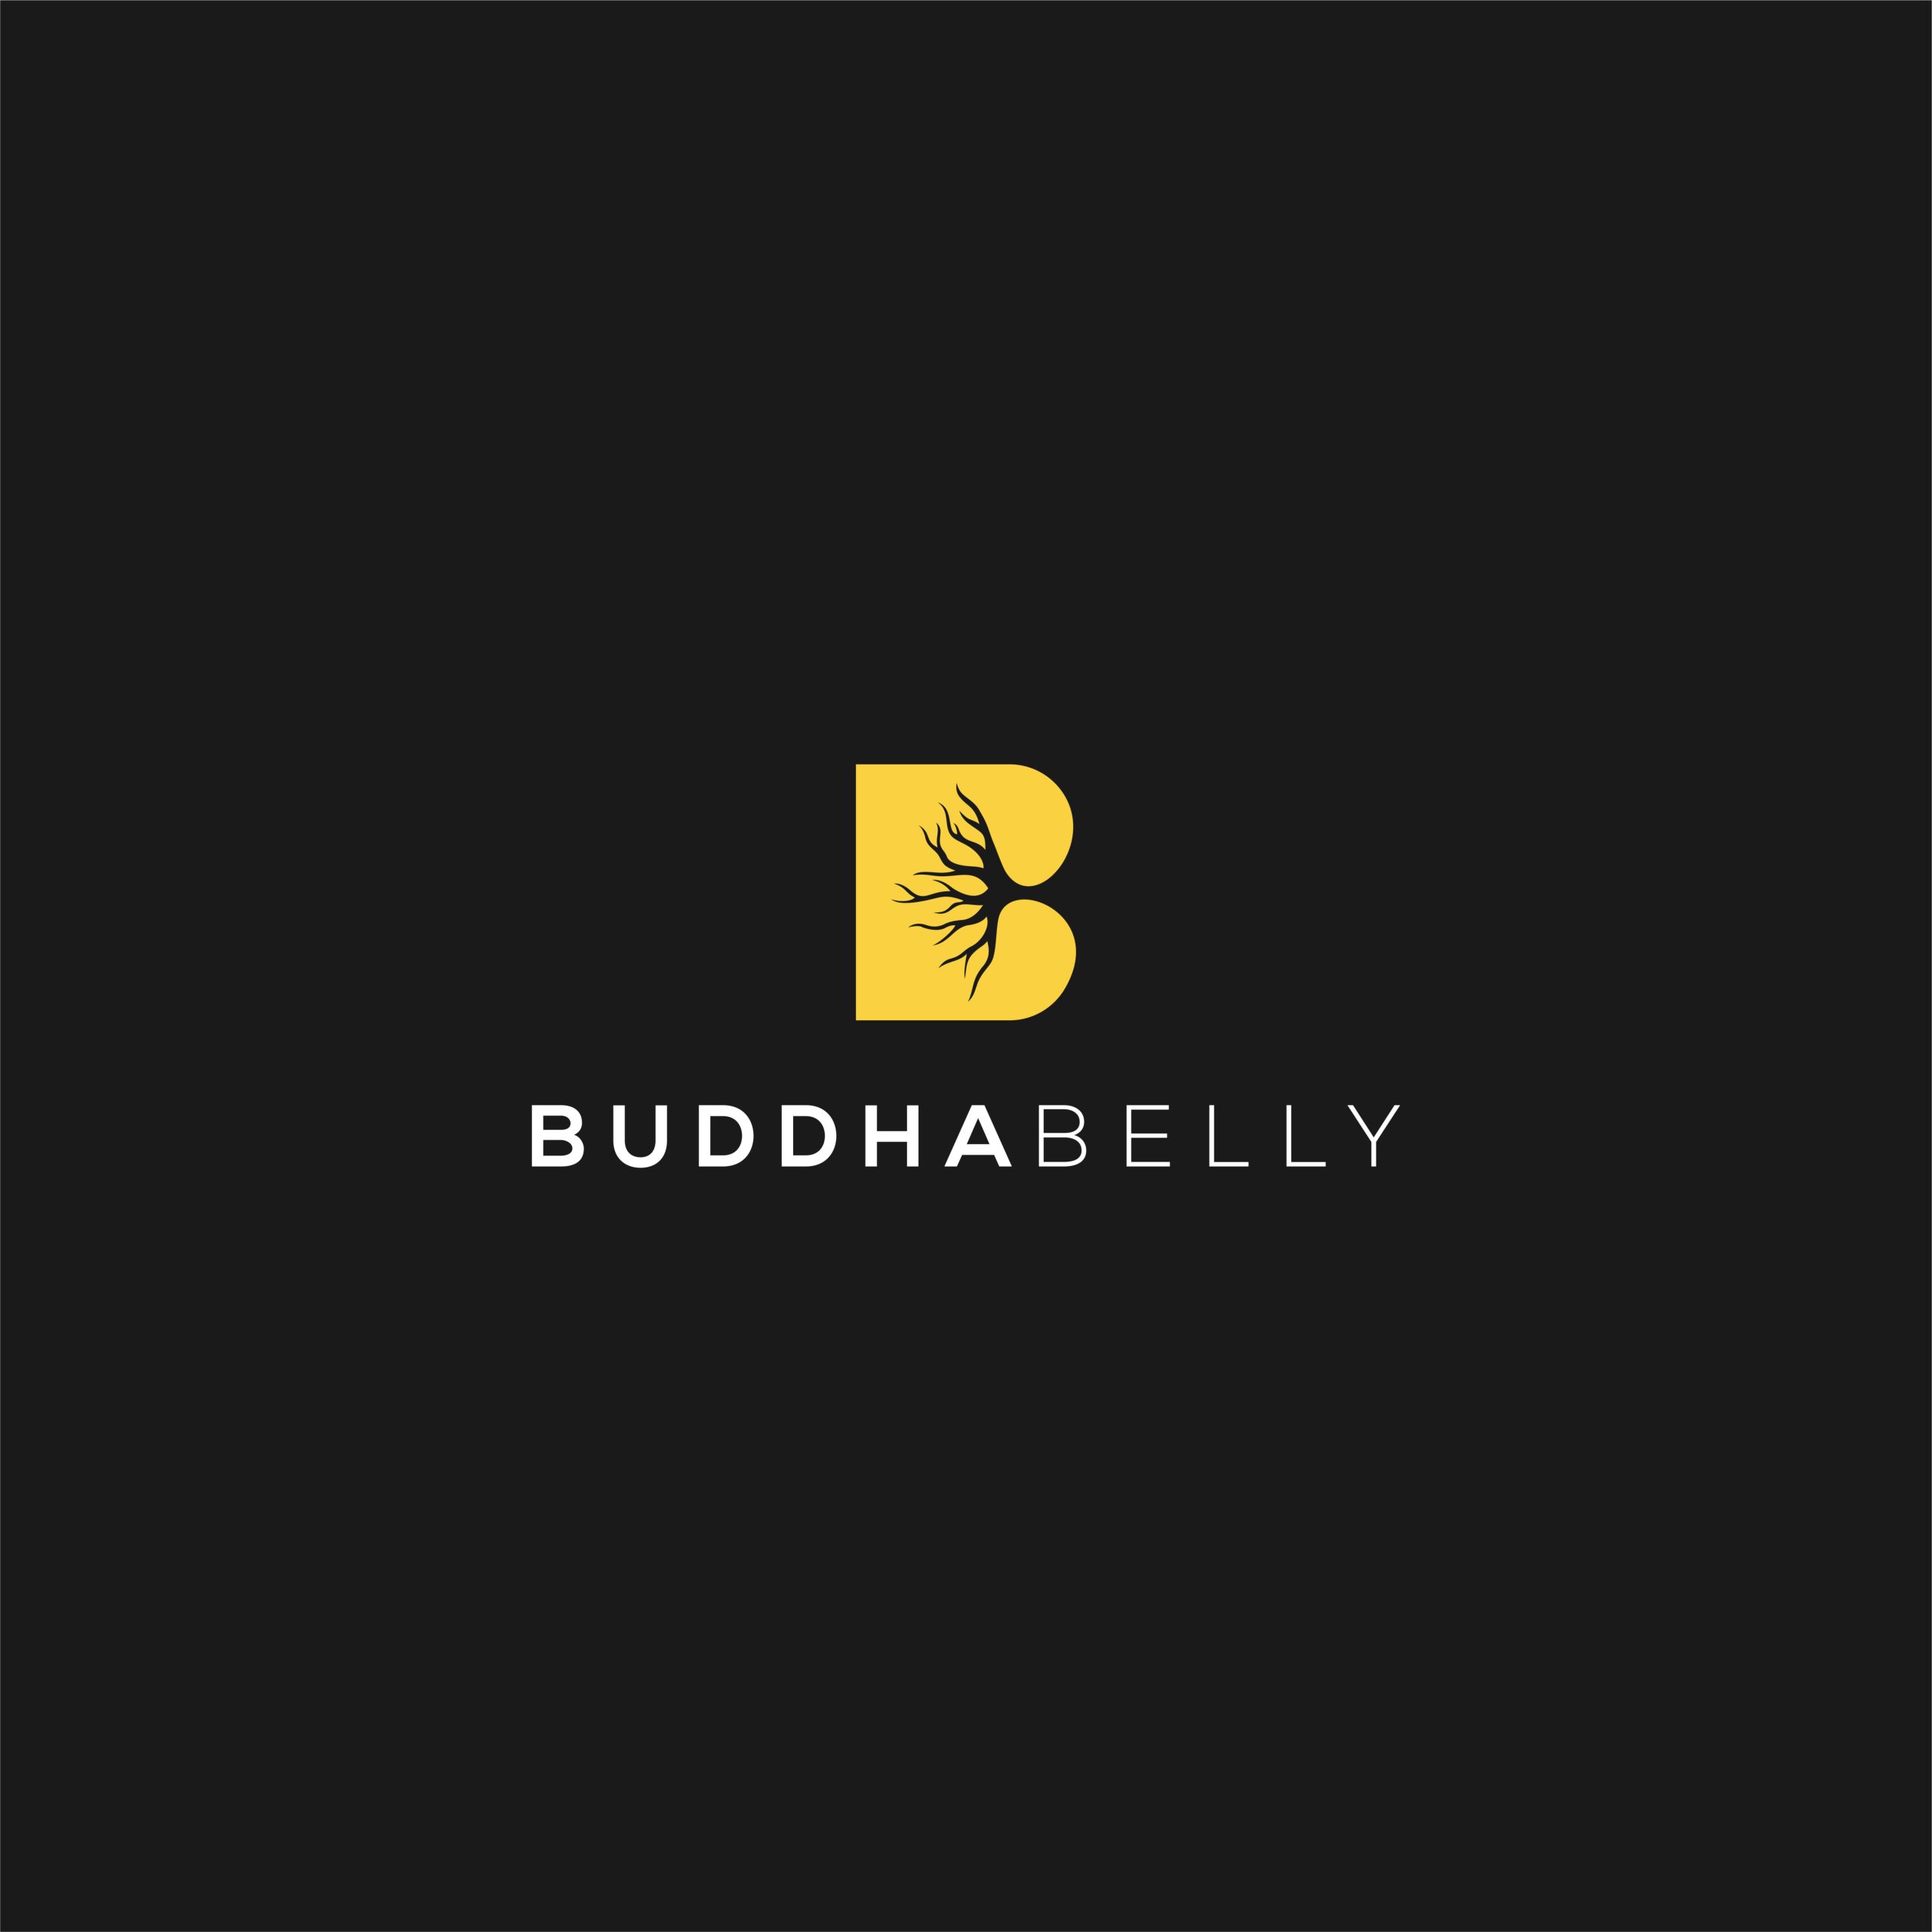 Buddha belly logo on a black background.